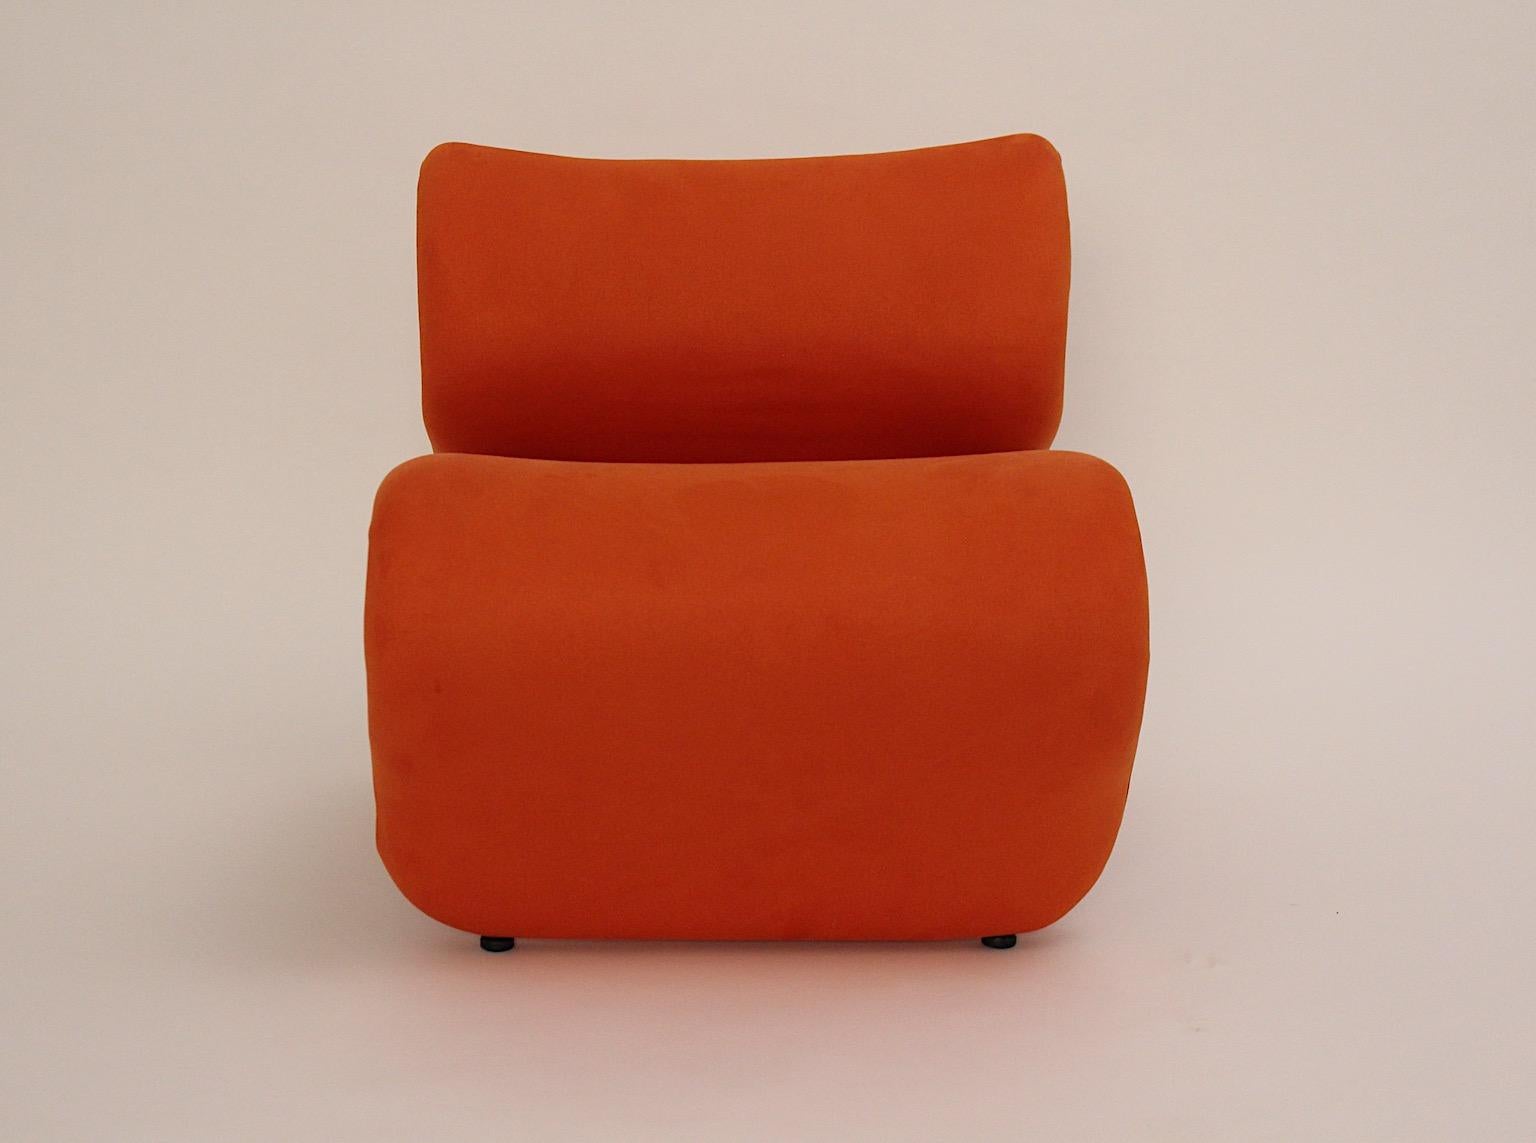 20th Century Space Age Vintage Sculptural Orange Etcetera Chair by Jan Ekselius 1970s Sweden